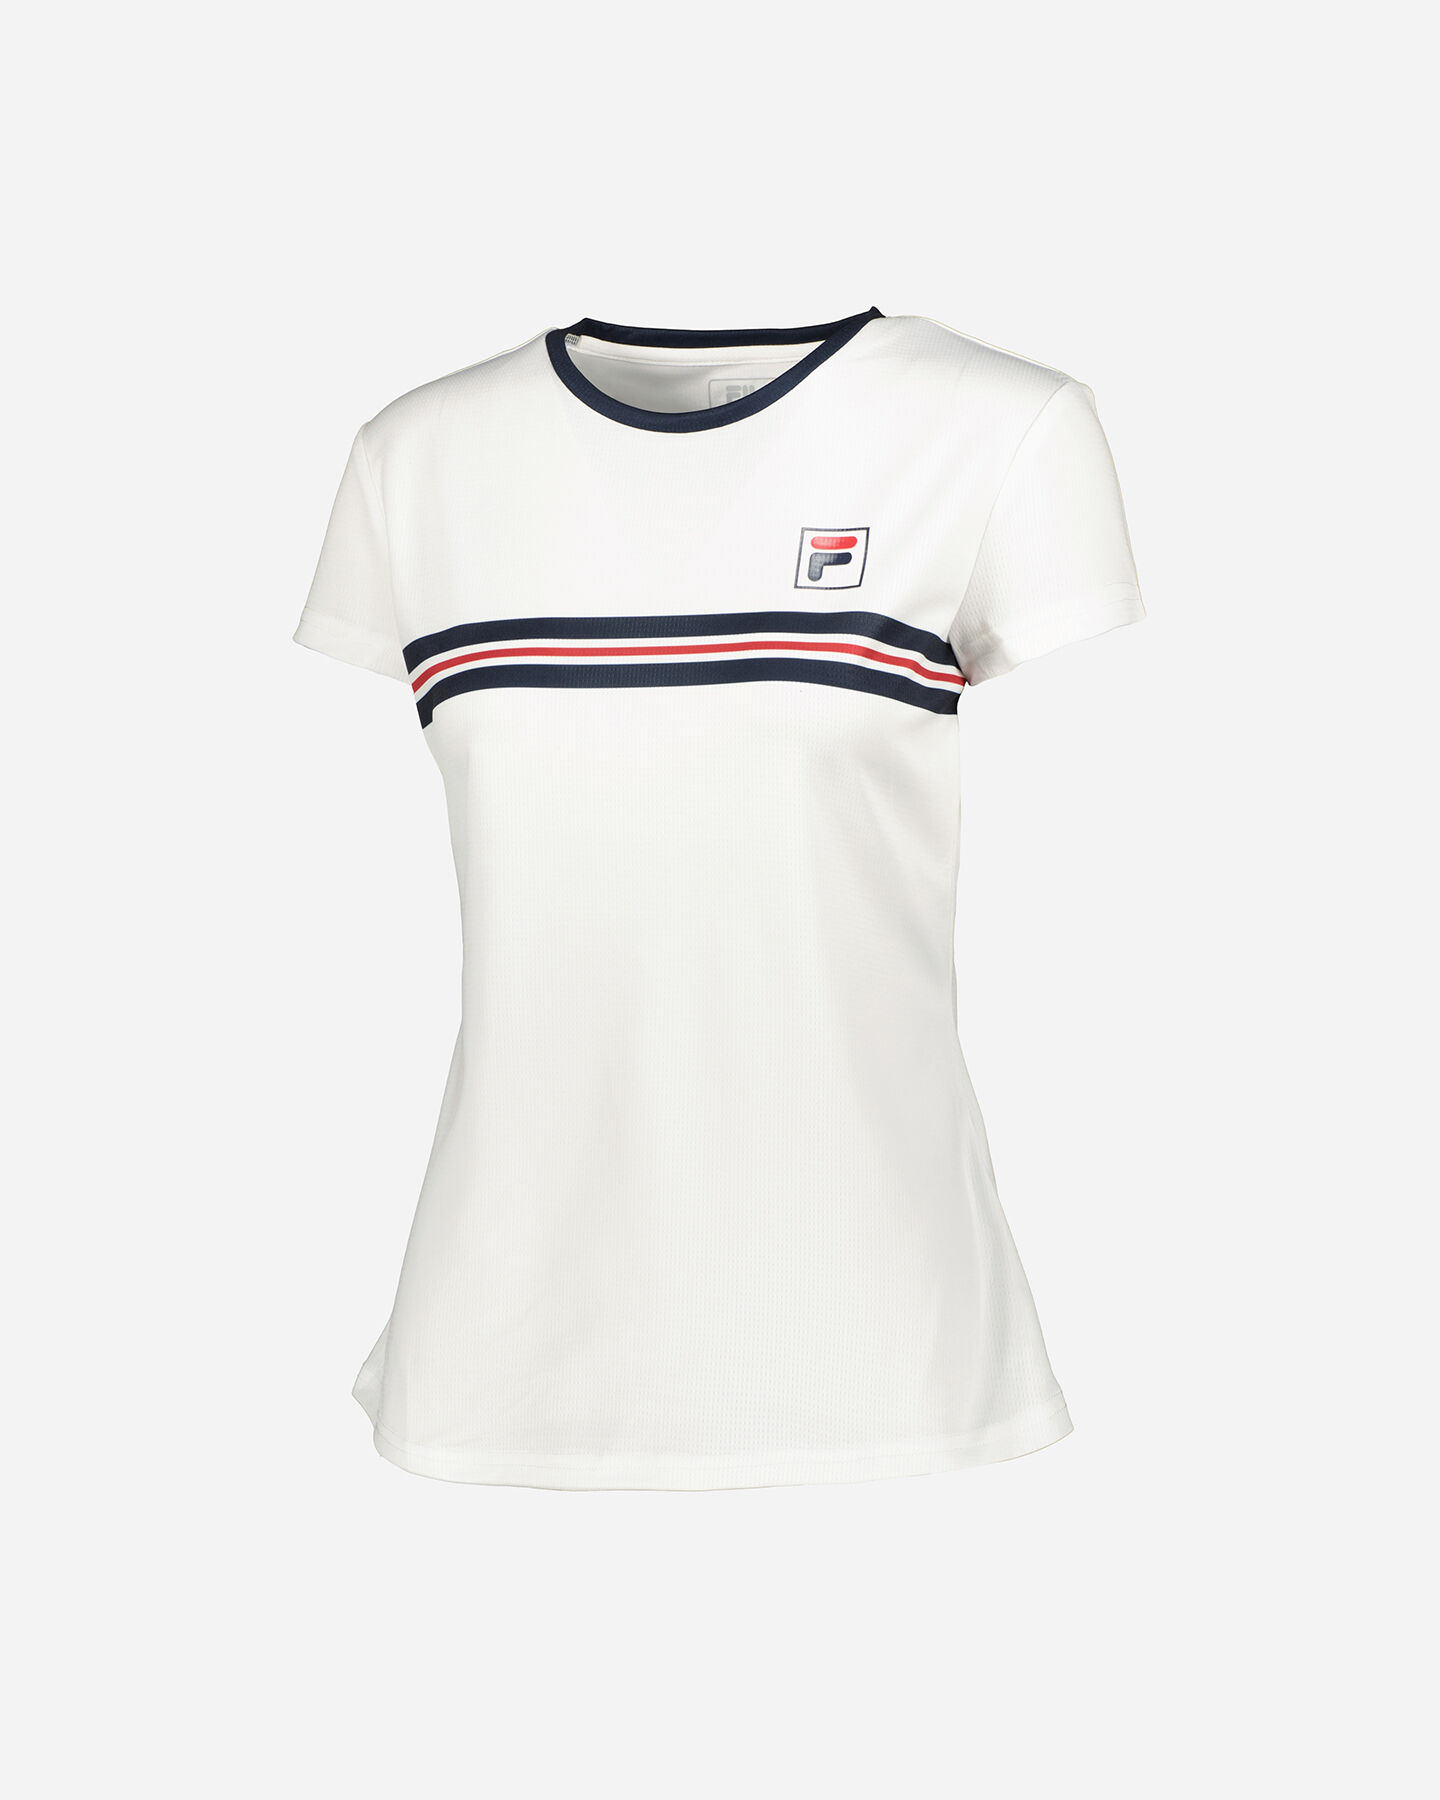  T-Shirt tennis FILA CLASSIC TENNIS W S4100447|001|XS scatto 0